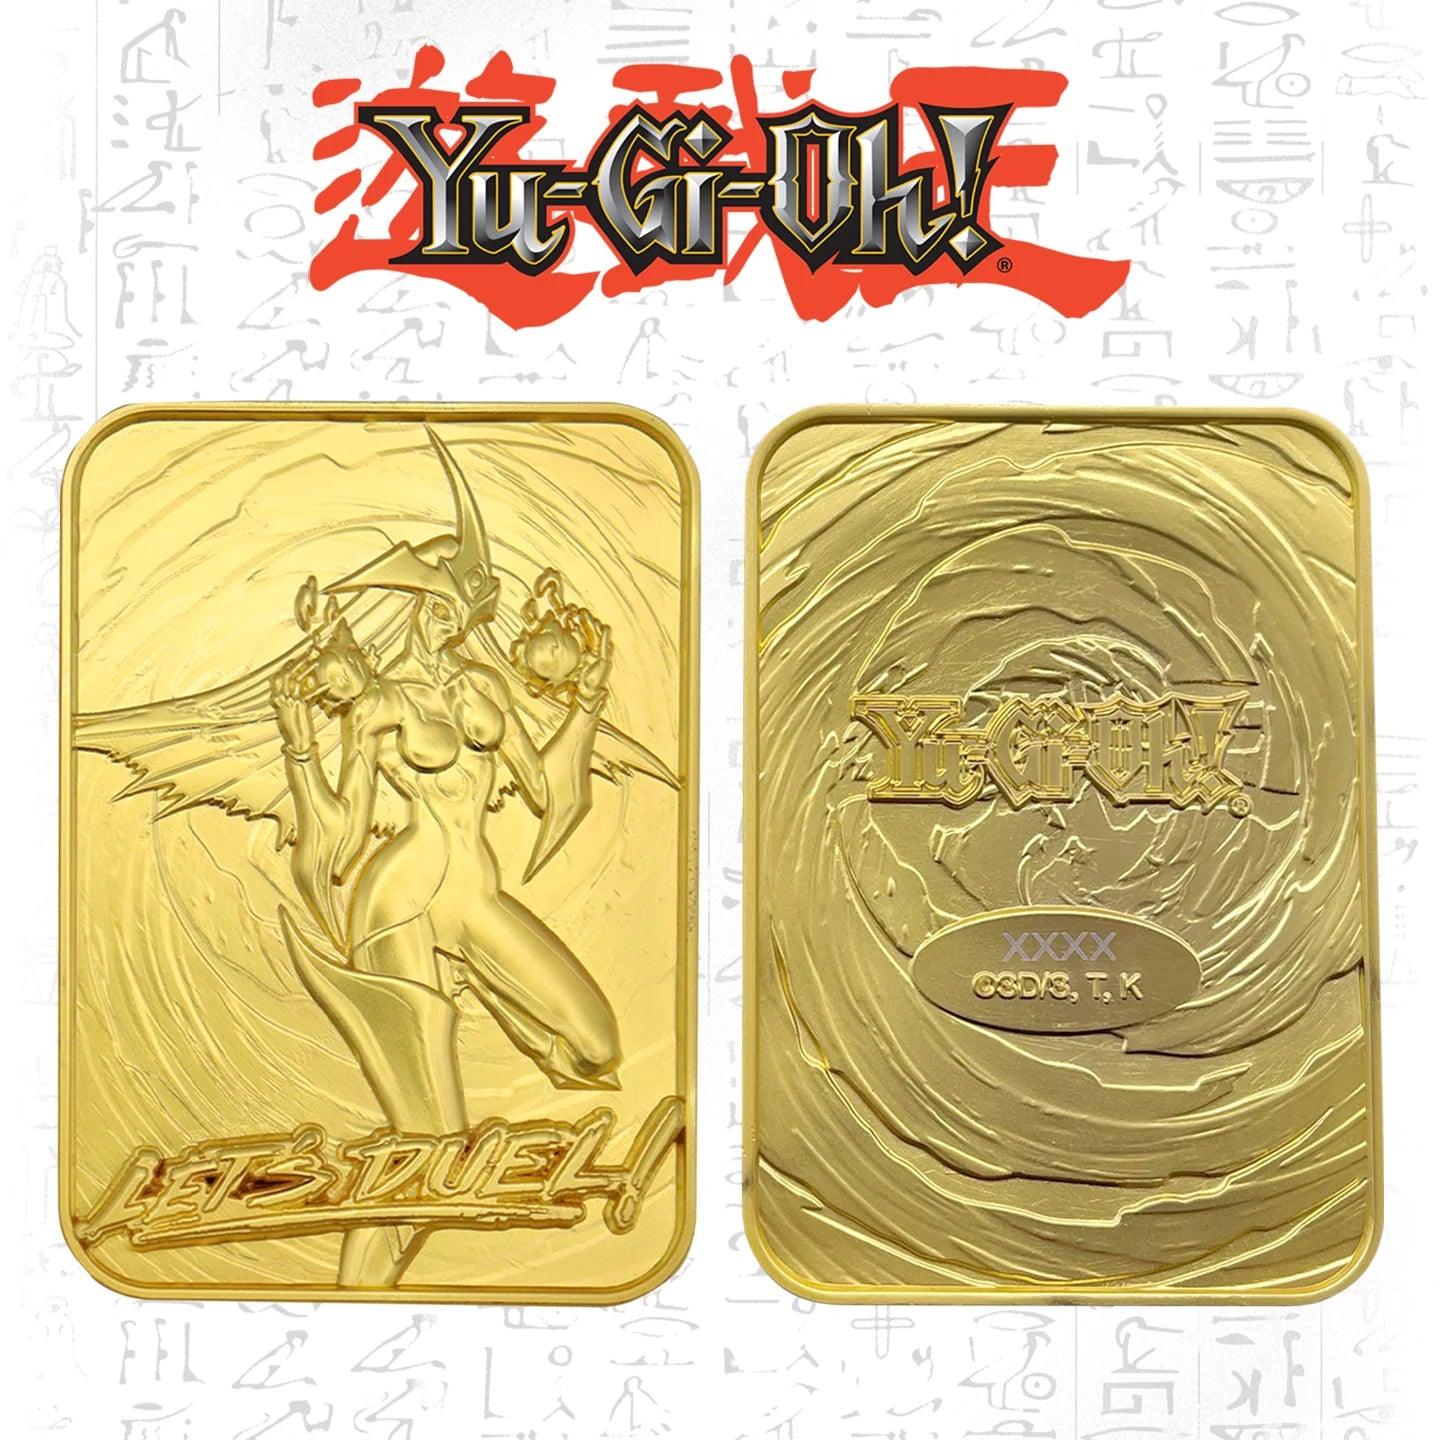 GX Elemental Hero Burstinatrix 24k Gold Plated Ingot - ZZGames.dk